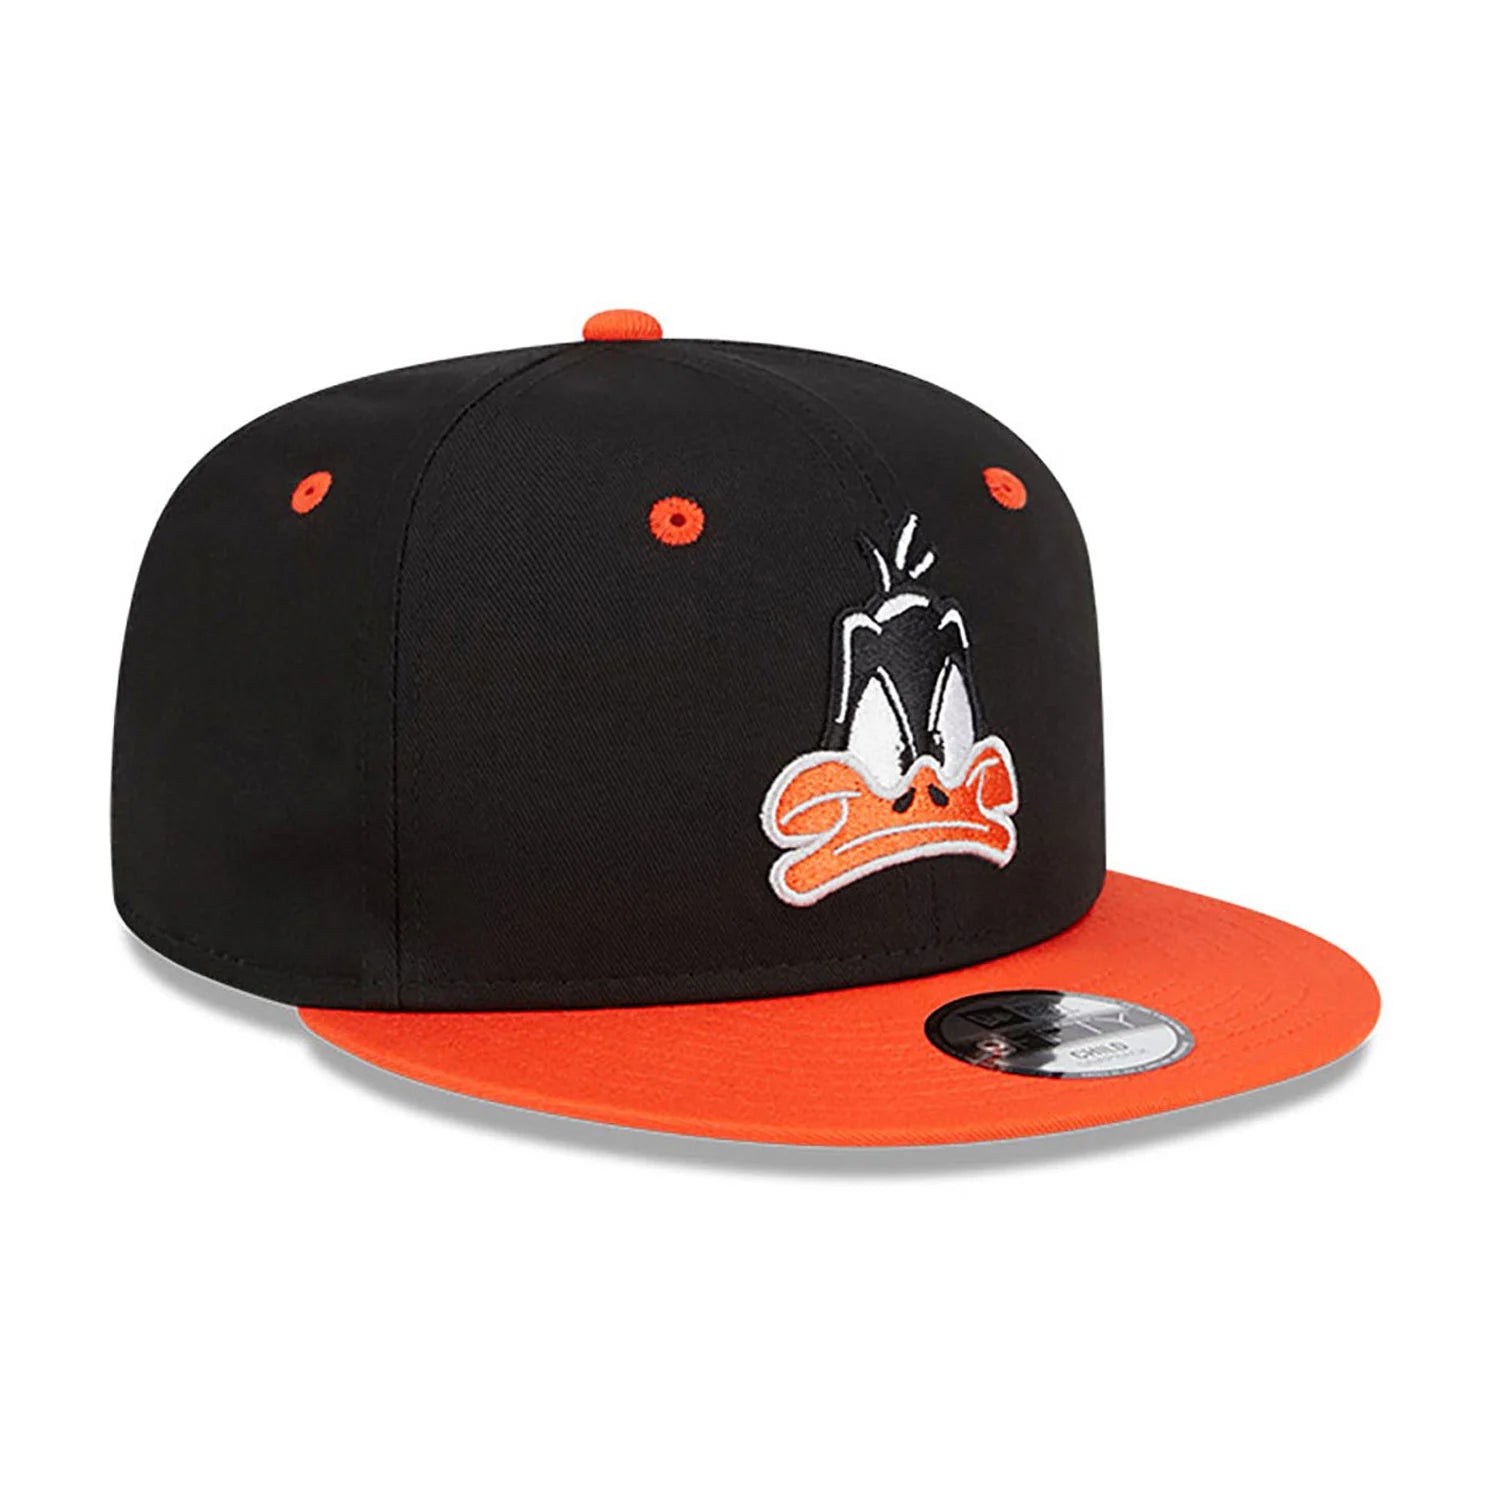 New Era kids 9Fifty snapback "Daffy Duck" Black/Orange (NEW Collection)